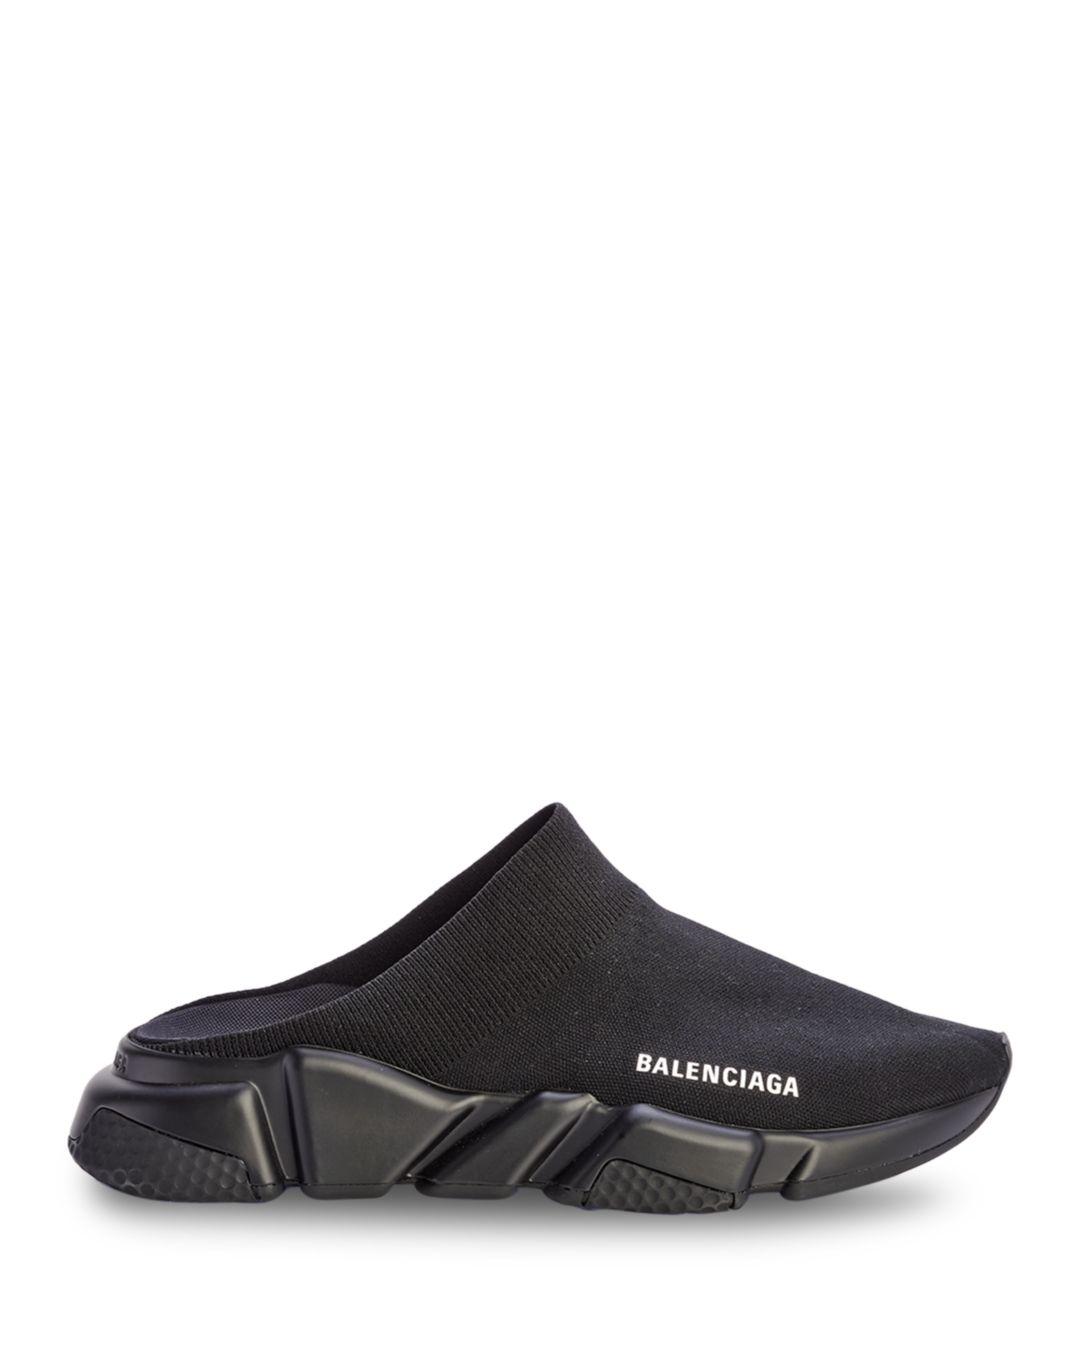 Balenciaga Speed Slip On Sneakers in Black | Lyst